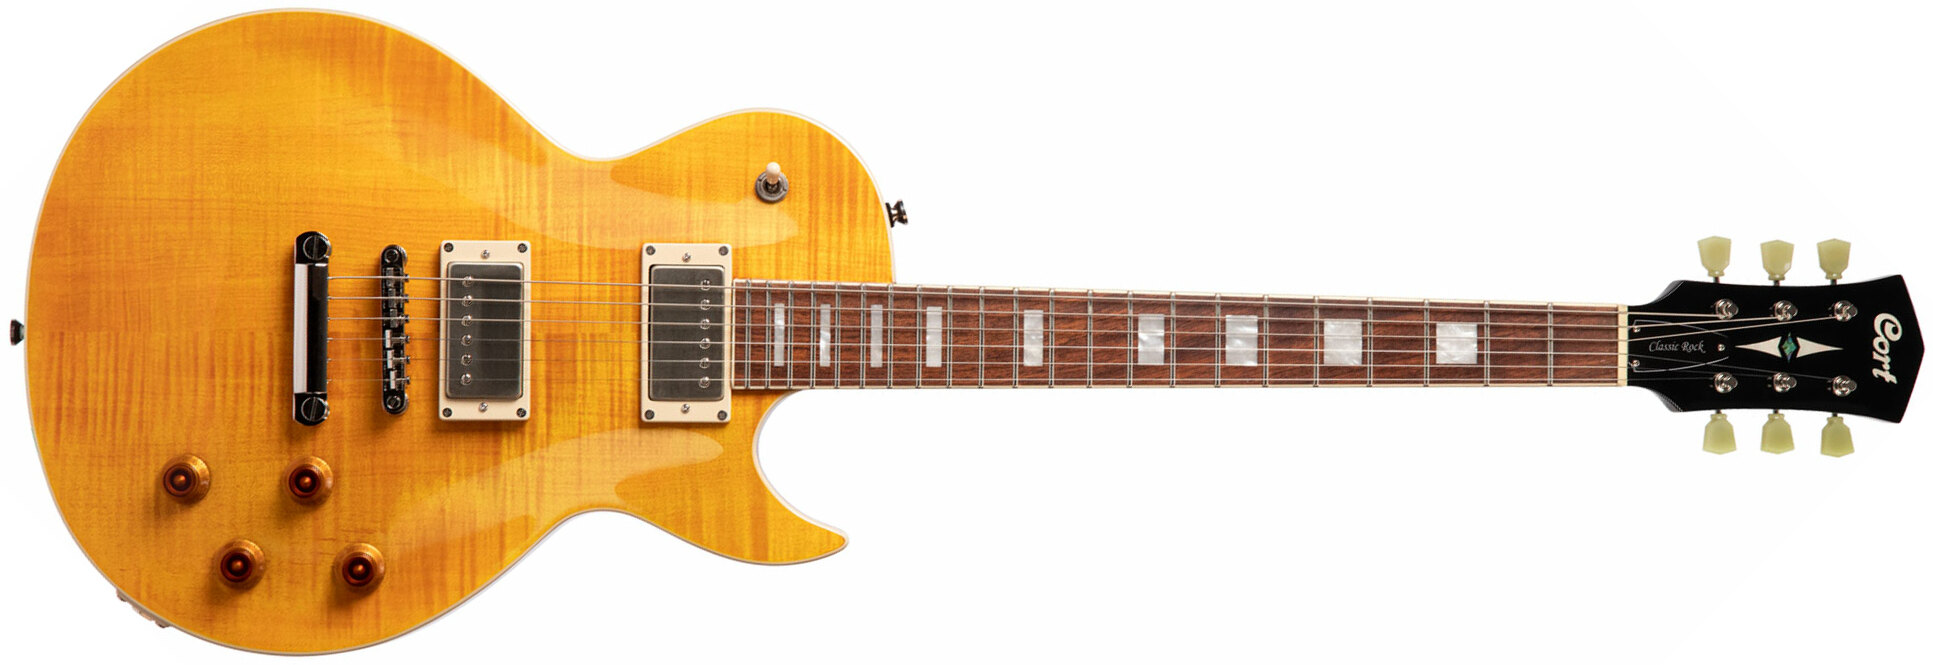 Cort Cr250 Ata Classic Rock Ht Hh Jat - Ambre Antique - Single cut electric guitar - Main picture